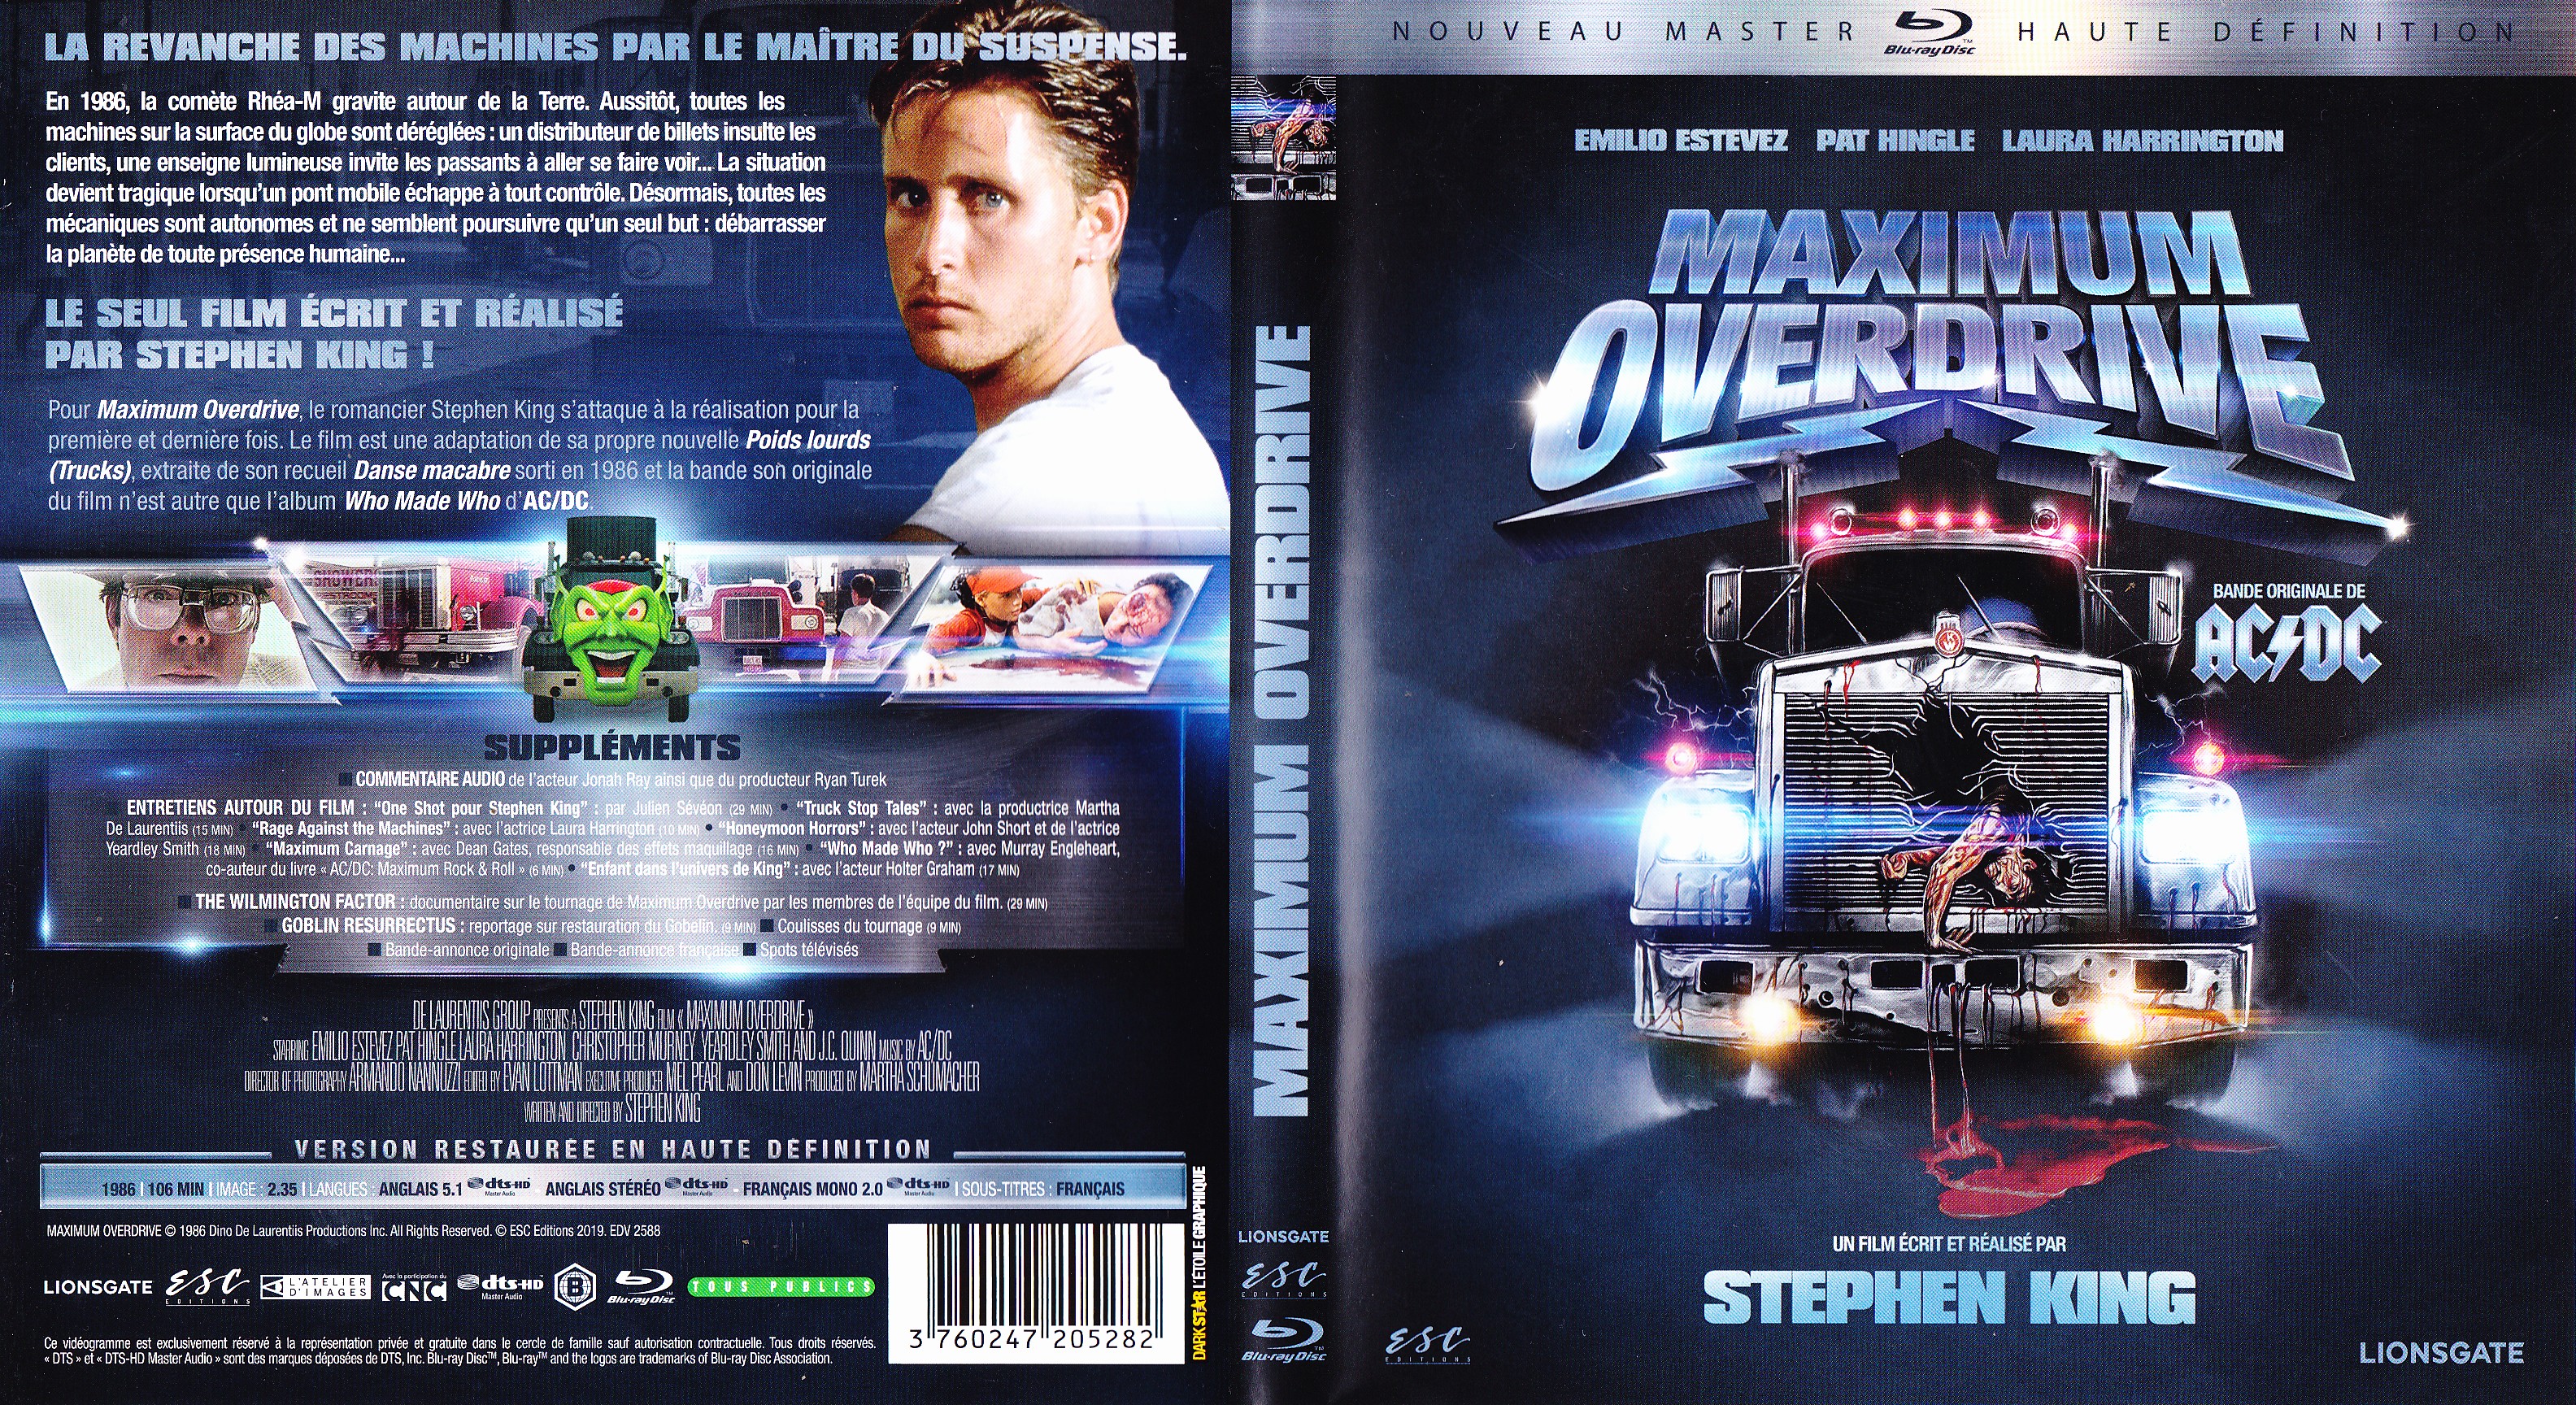 Jaquette DVD Maximum overdrive (BLU-RAY)